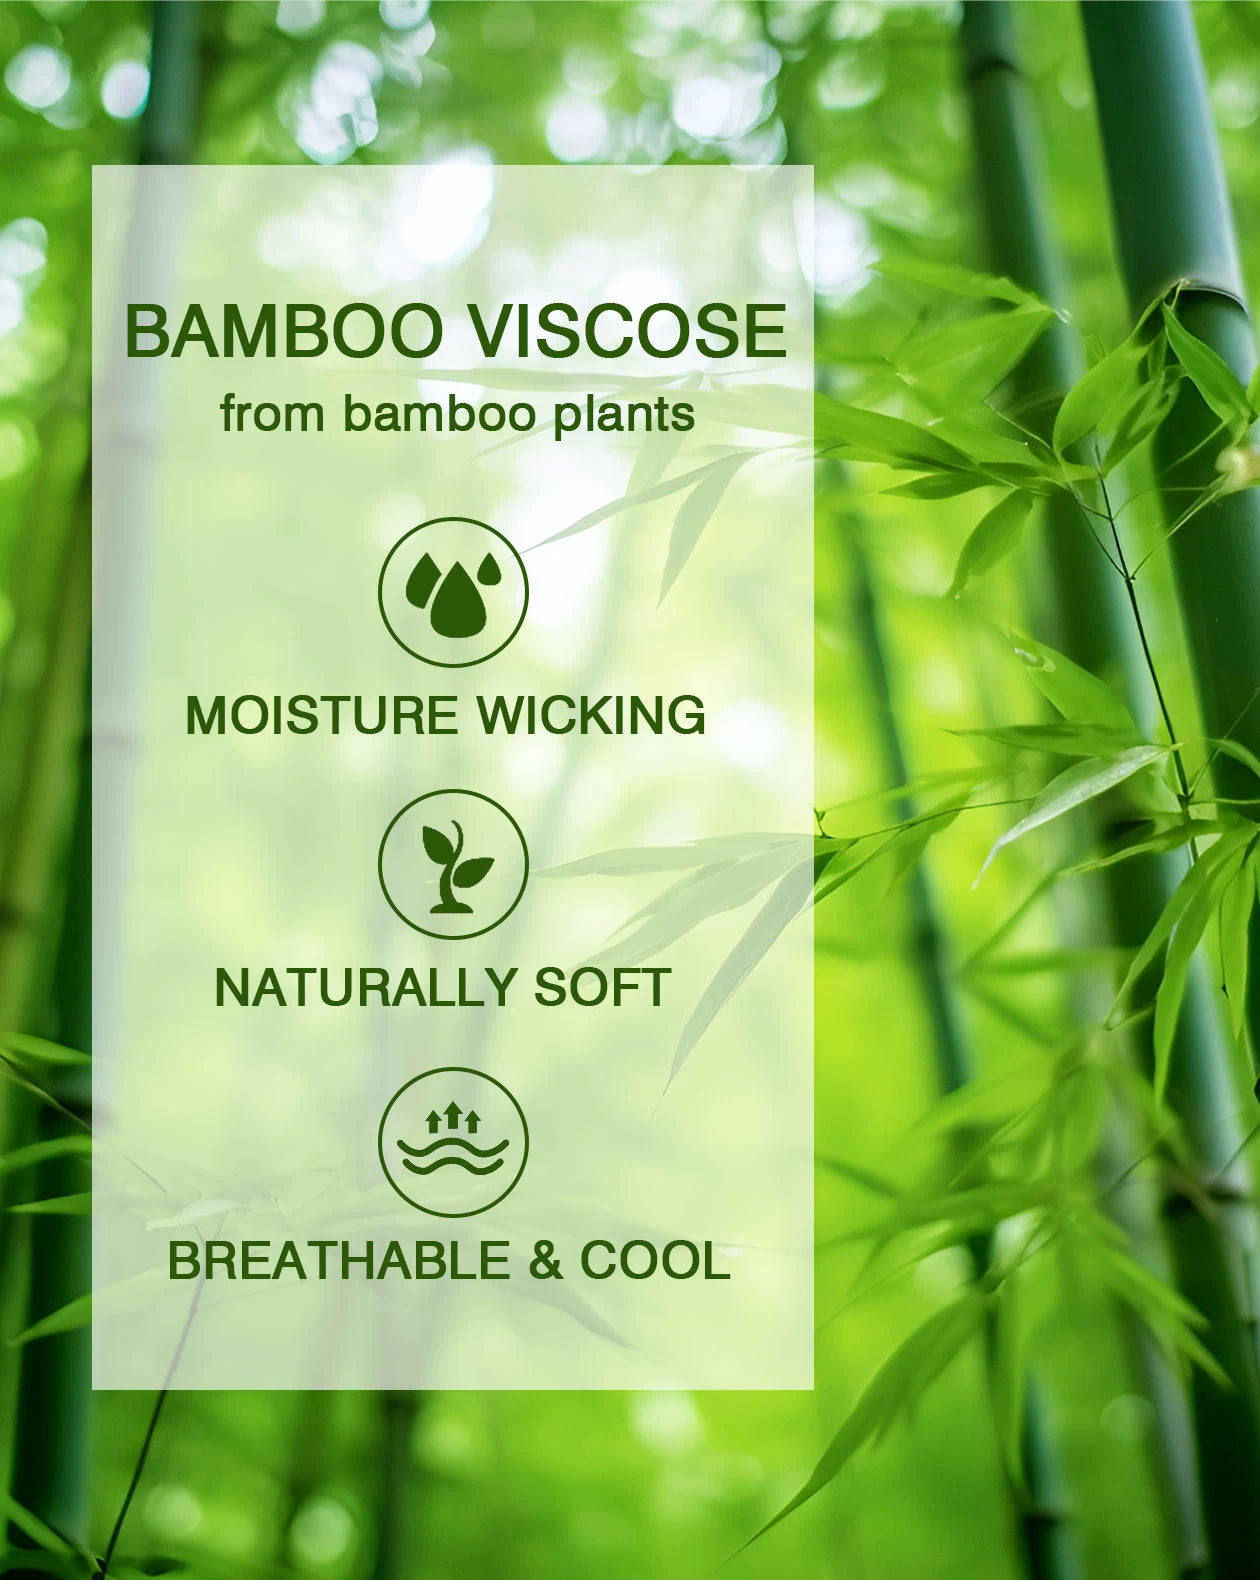 Dubinik® Bamboo Viscose Mens Short Sleeve Button Down Pockets Shirts#39012